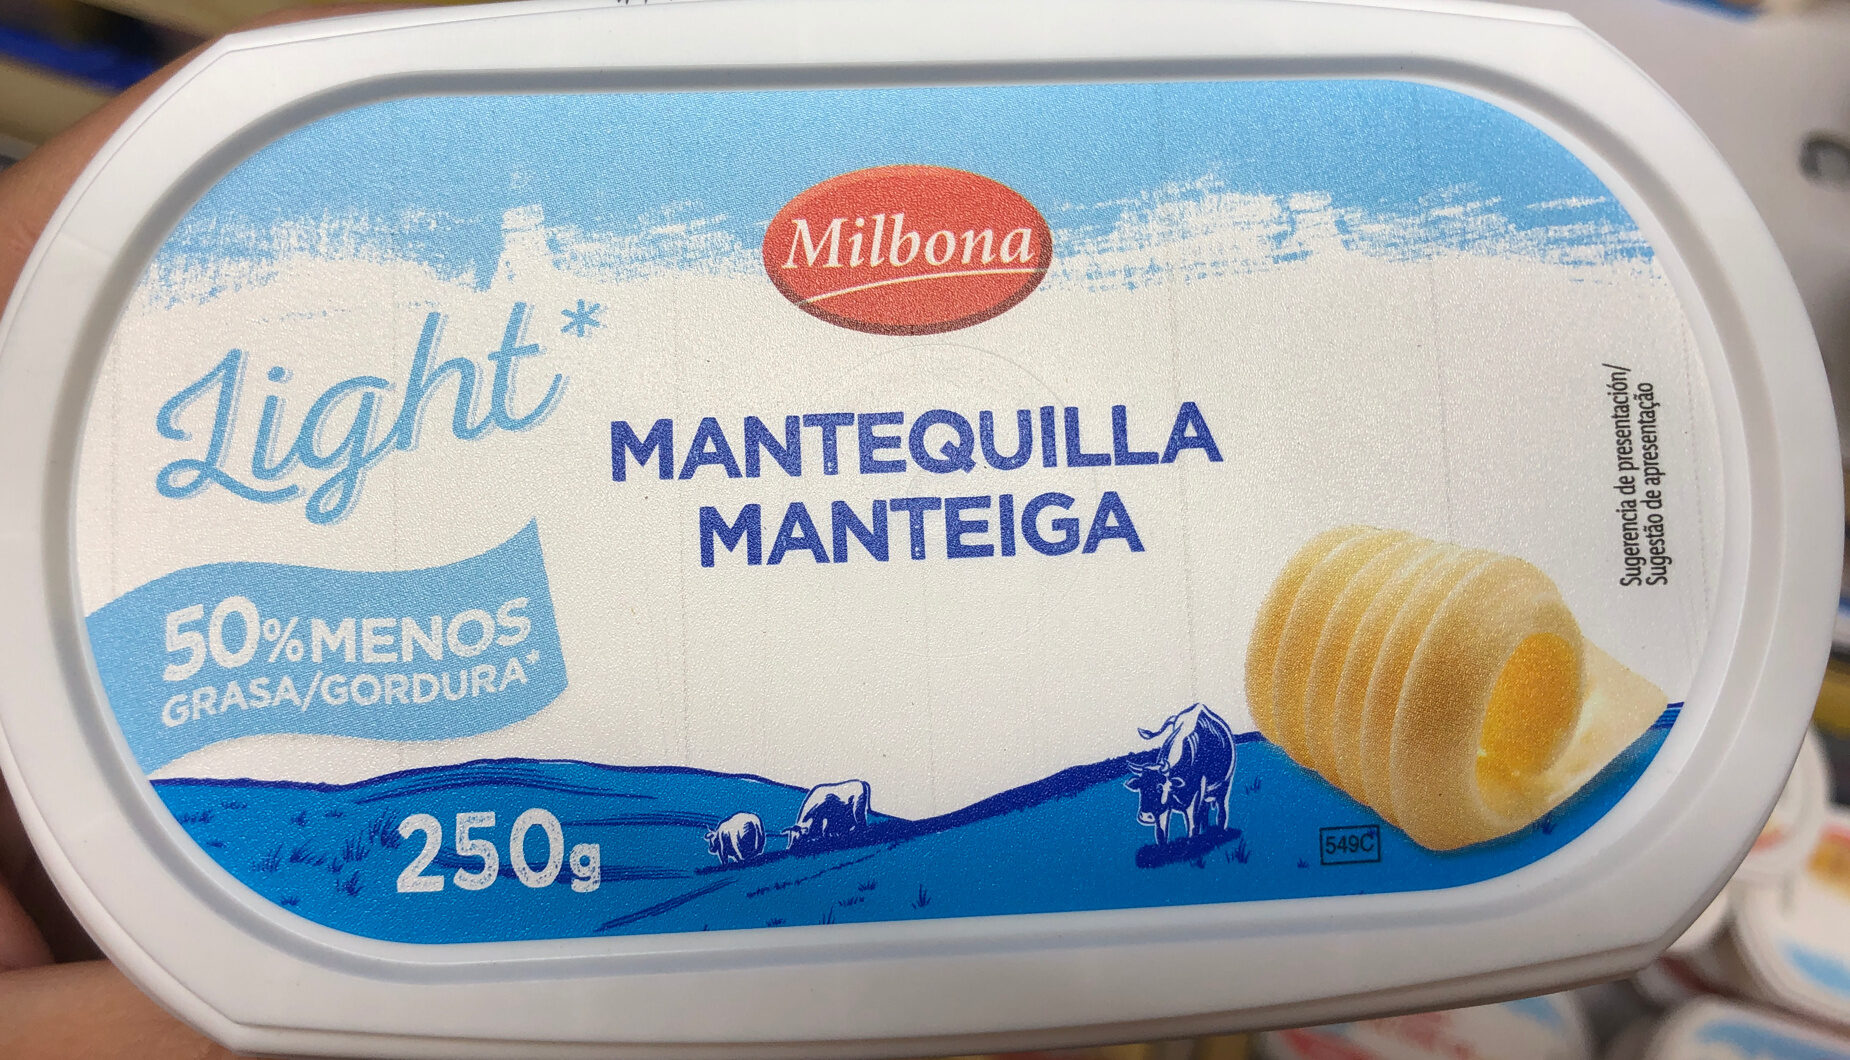 Mantequilla Manteiga - Produktua - en